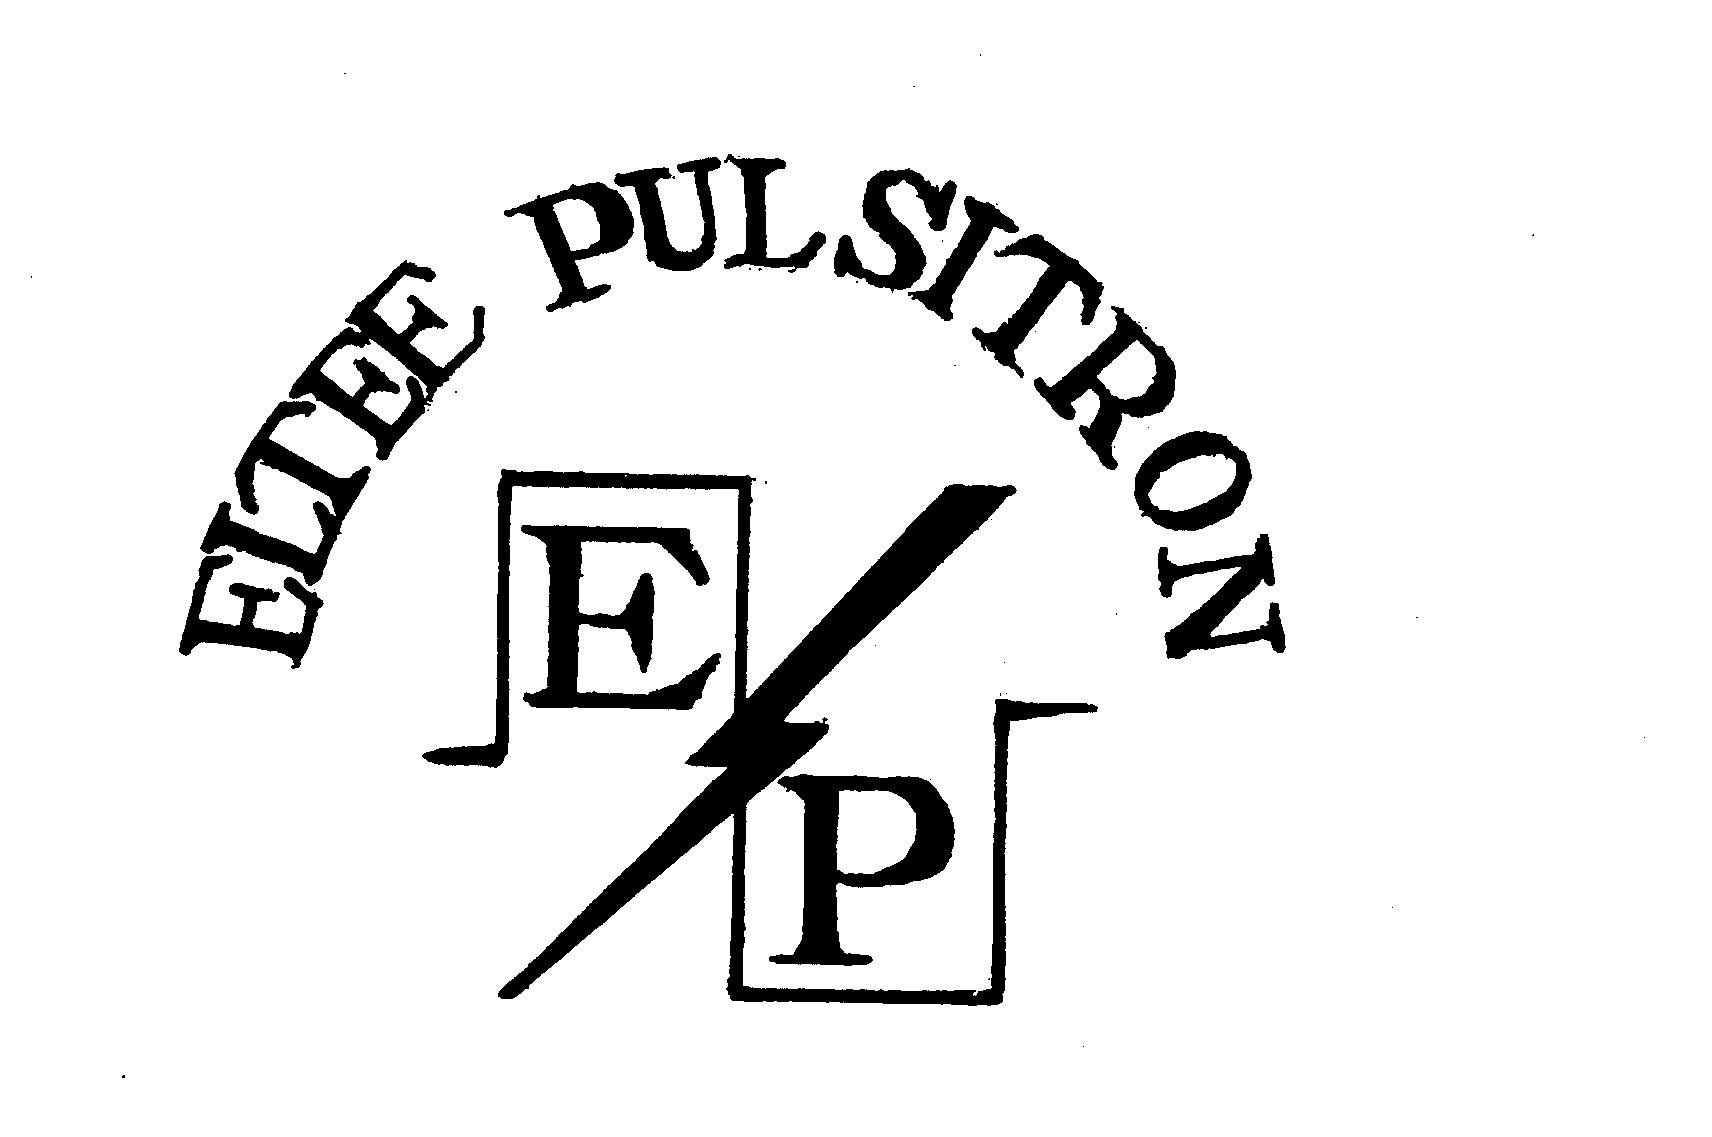  ELTEE PULSITRON E/P